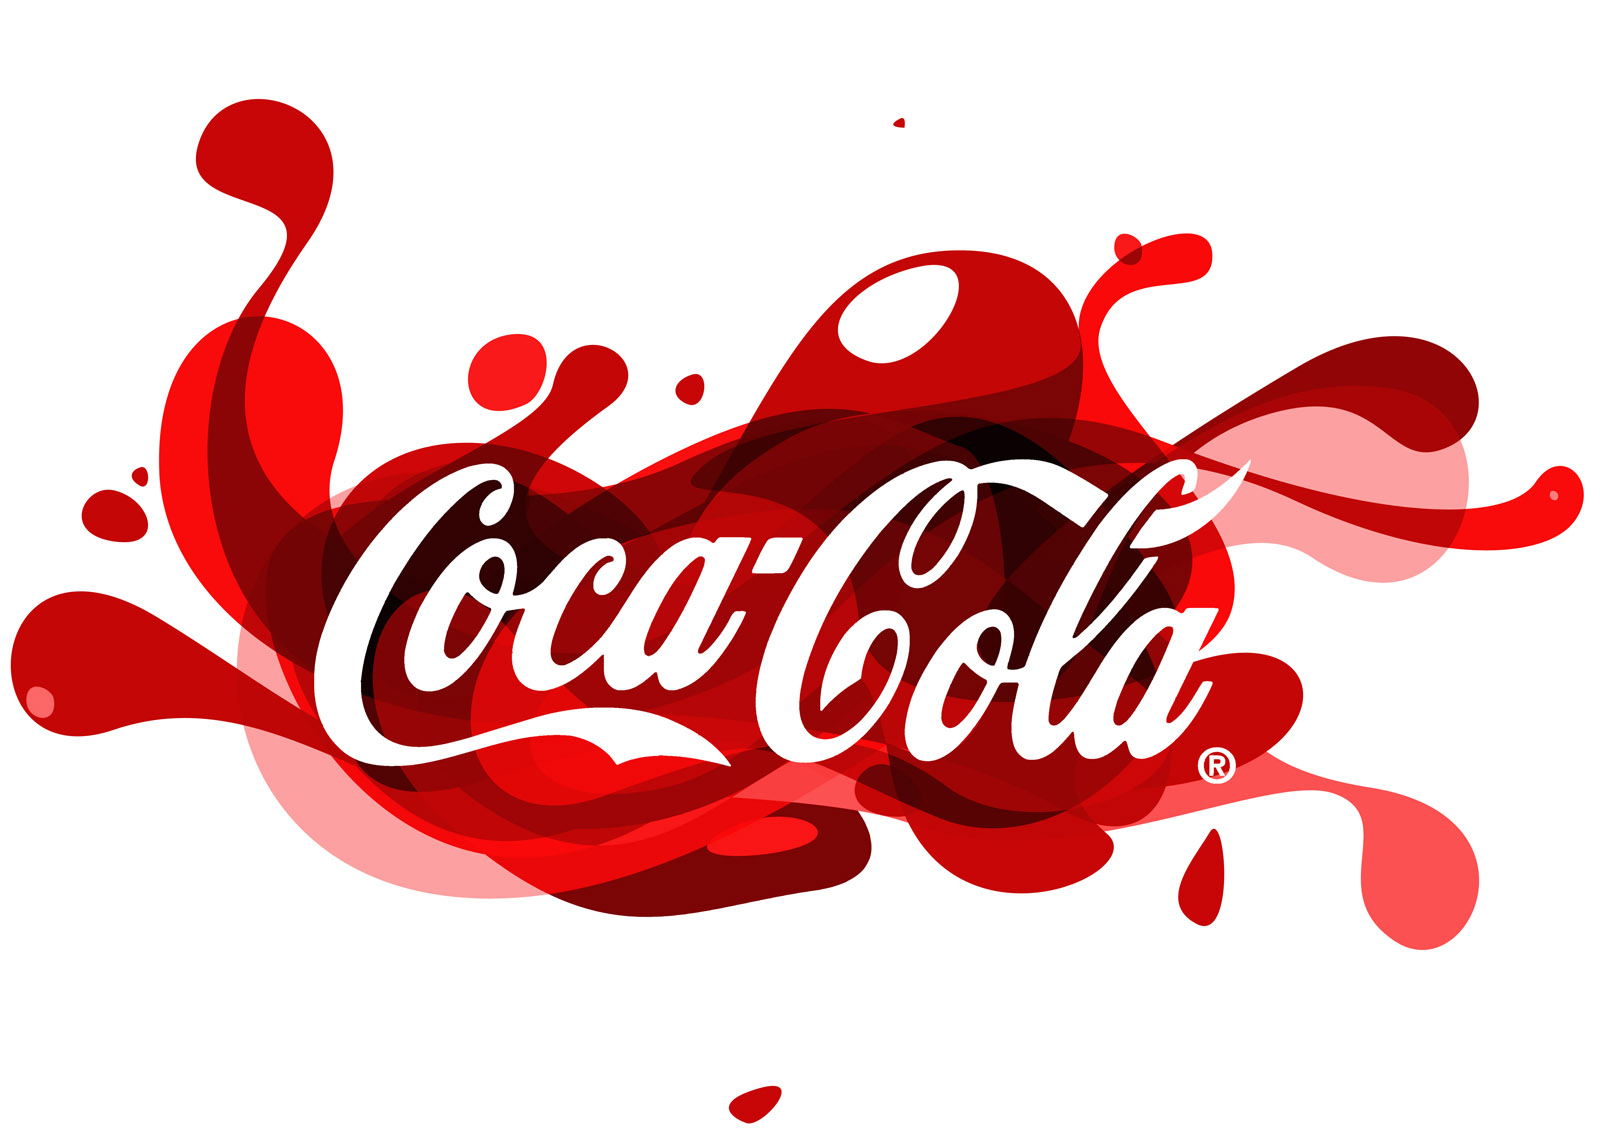 Coca Cola HD Logos Wallpaper In For